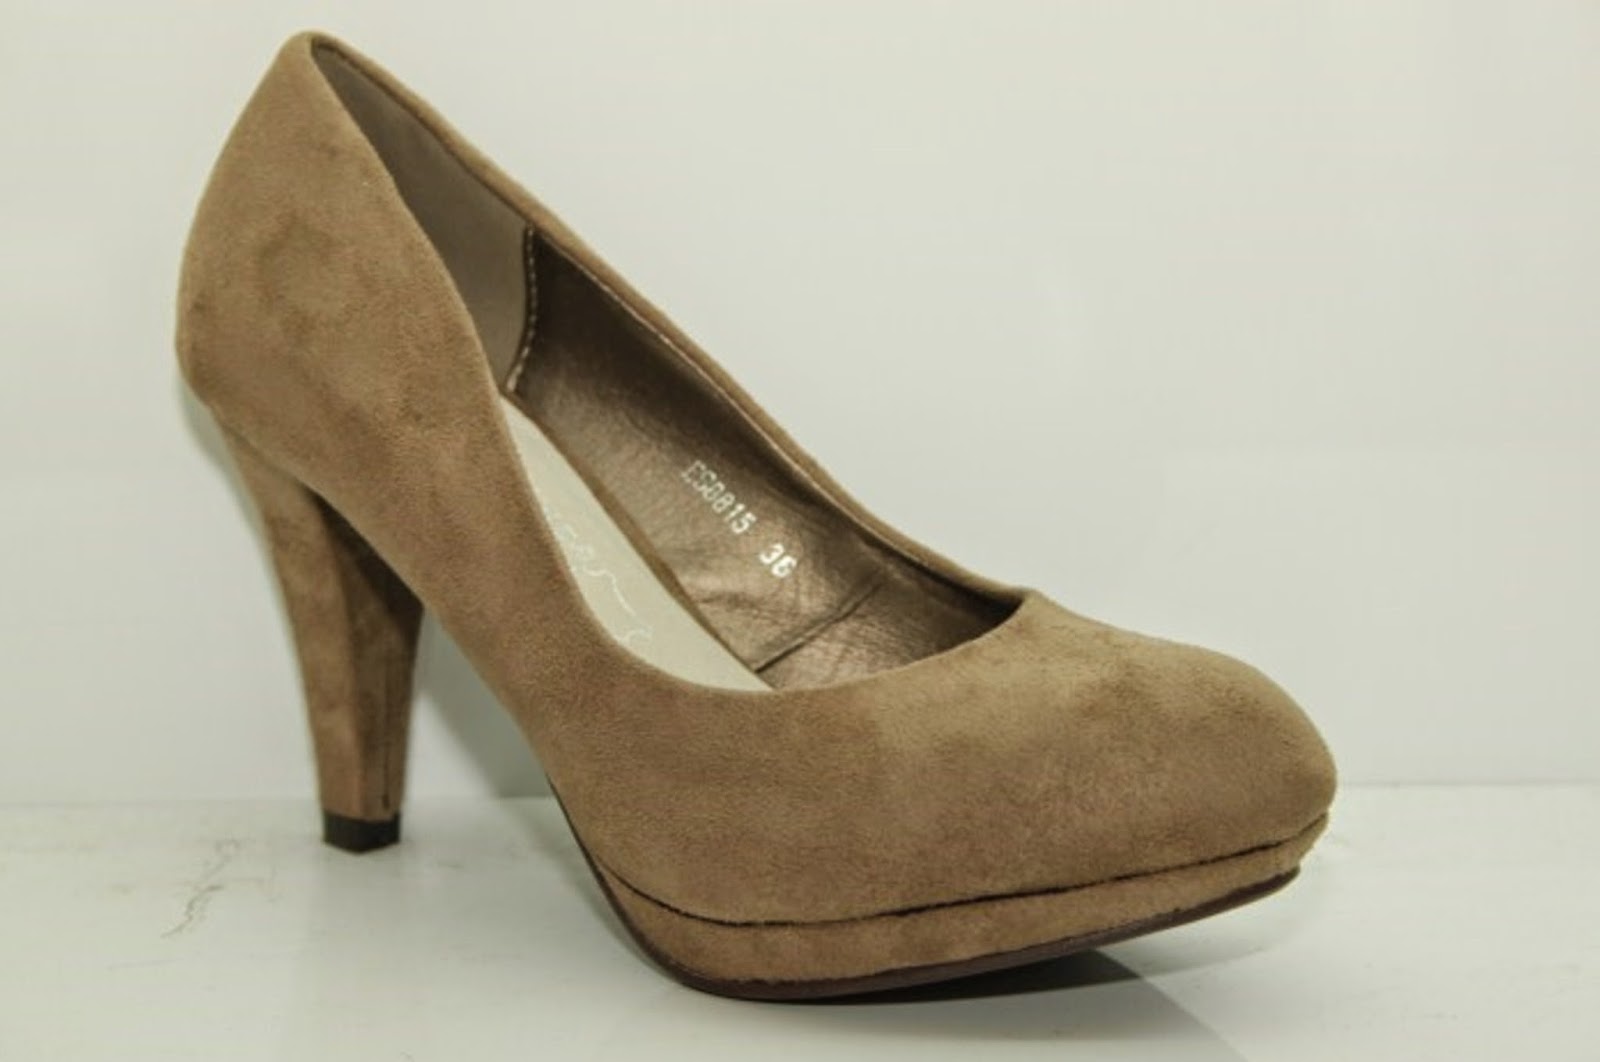 http://www.ebay.fr/itm/chaussures-femme-escarpins-vert-bleu-marron-taupe-noir-rouge-36-37-38-39-40-41-/301472806726?ssPageName=STRK:MESE:IT